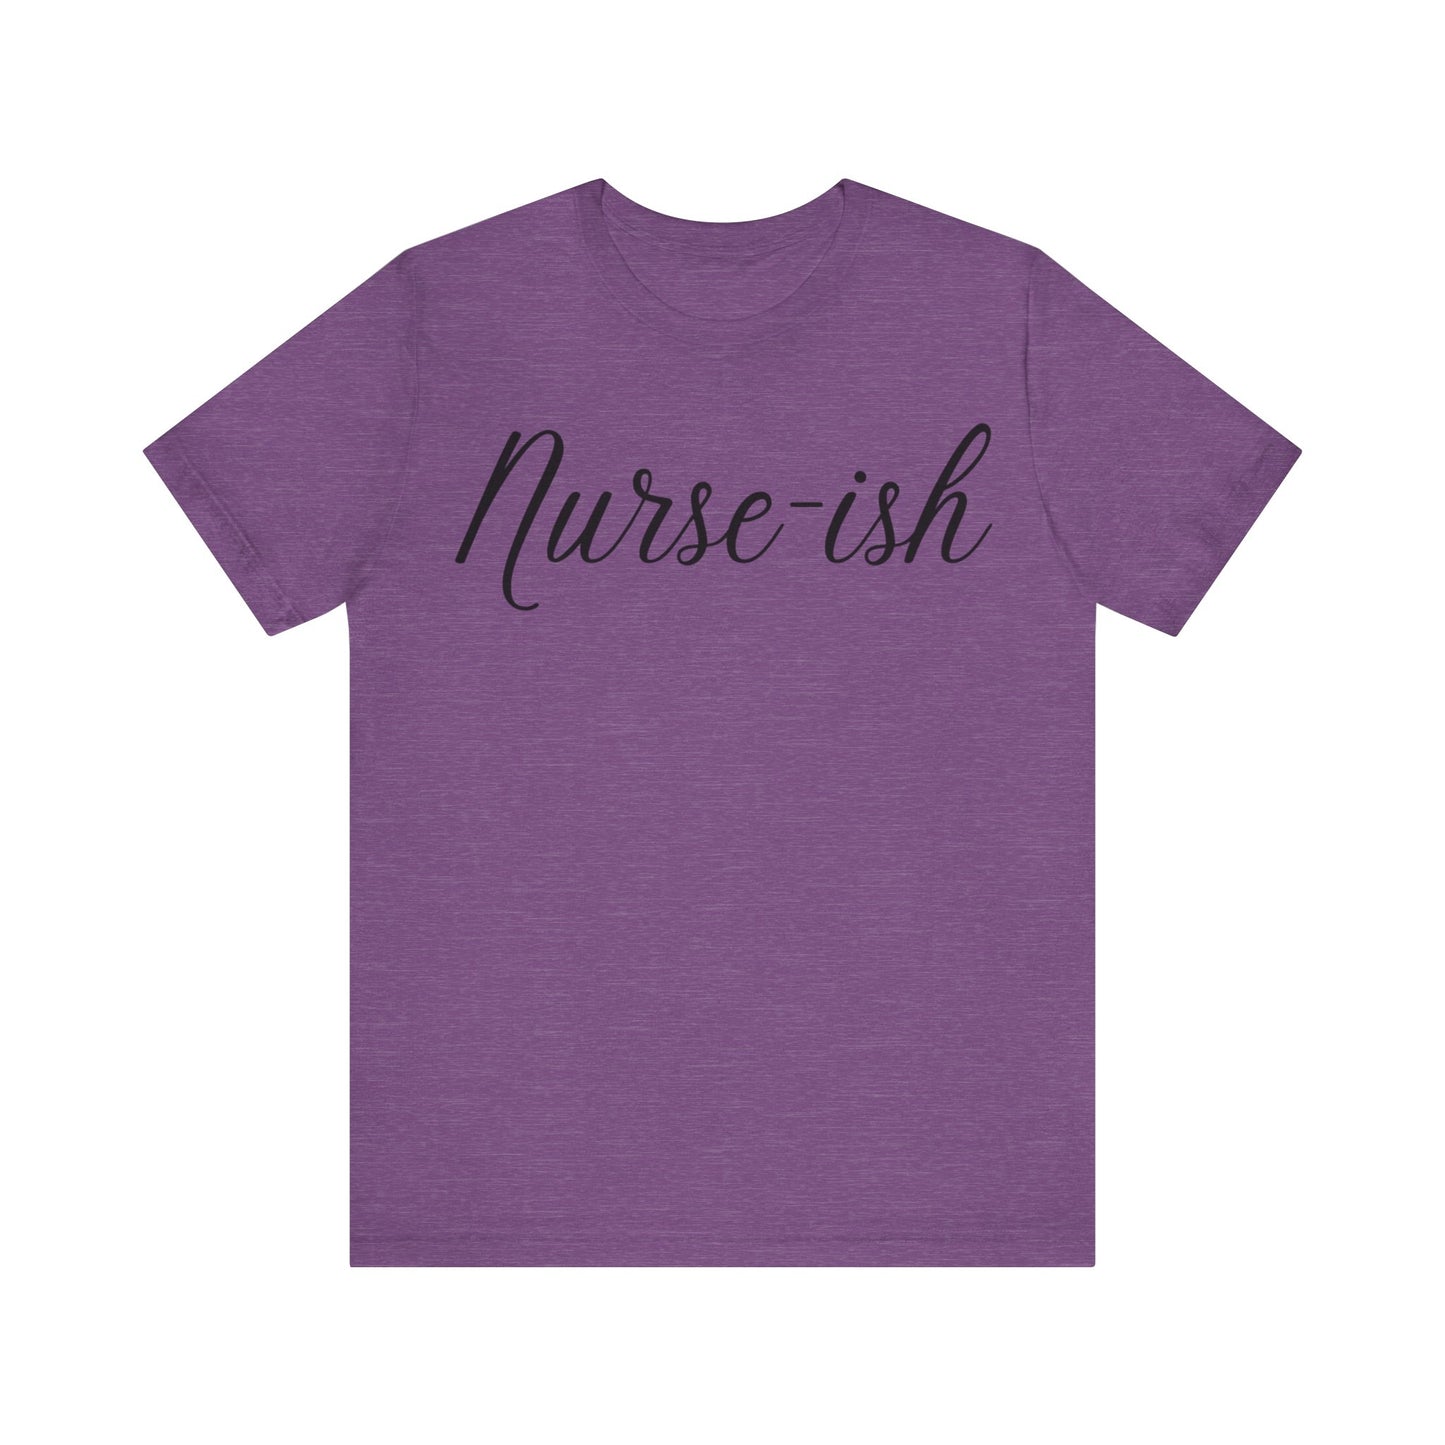 "Nurse-ish" - Short Sleeve